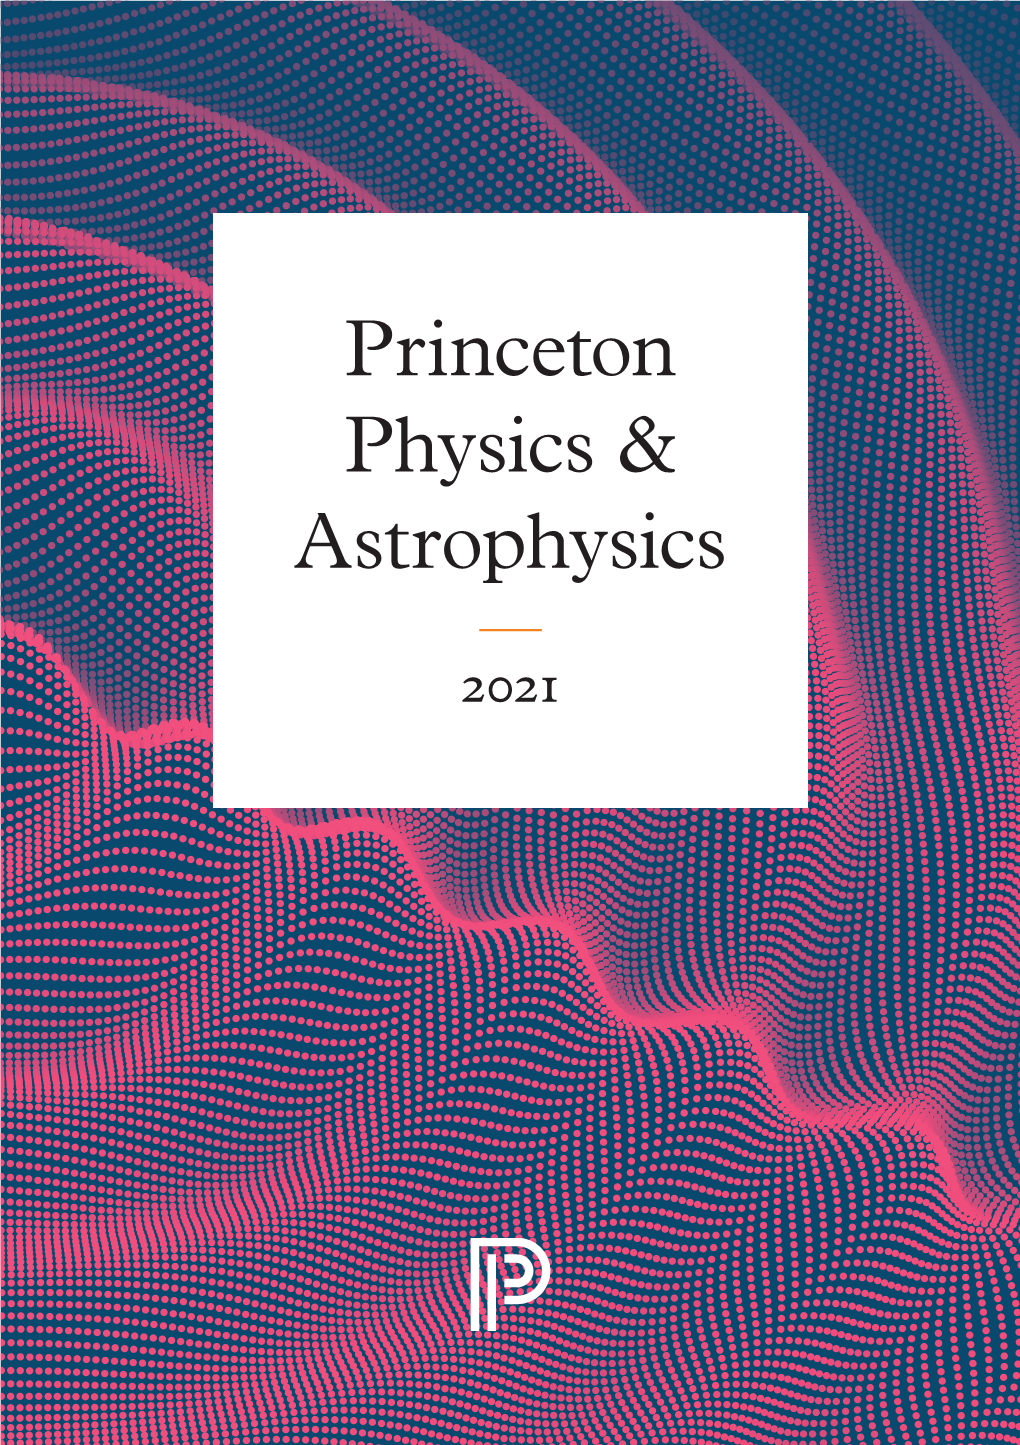 Princeton Physics and Astrophysics 2021